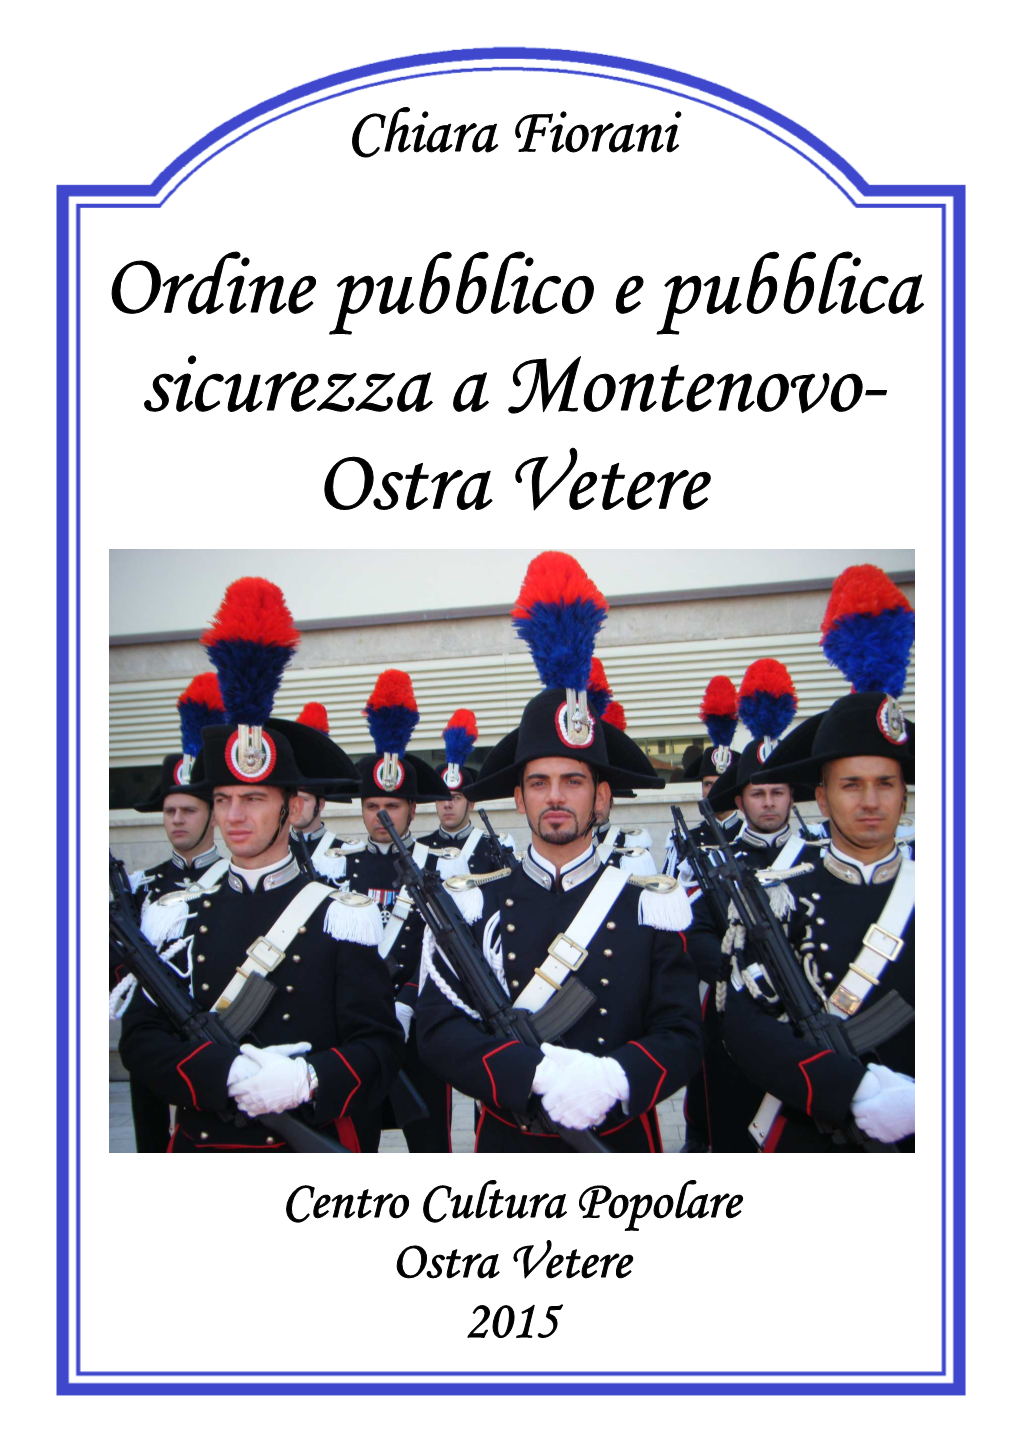 Ostra Vetere - Ccp 242/2015 1 Chiara Fiorani